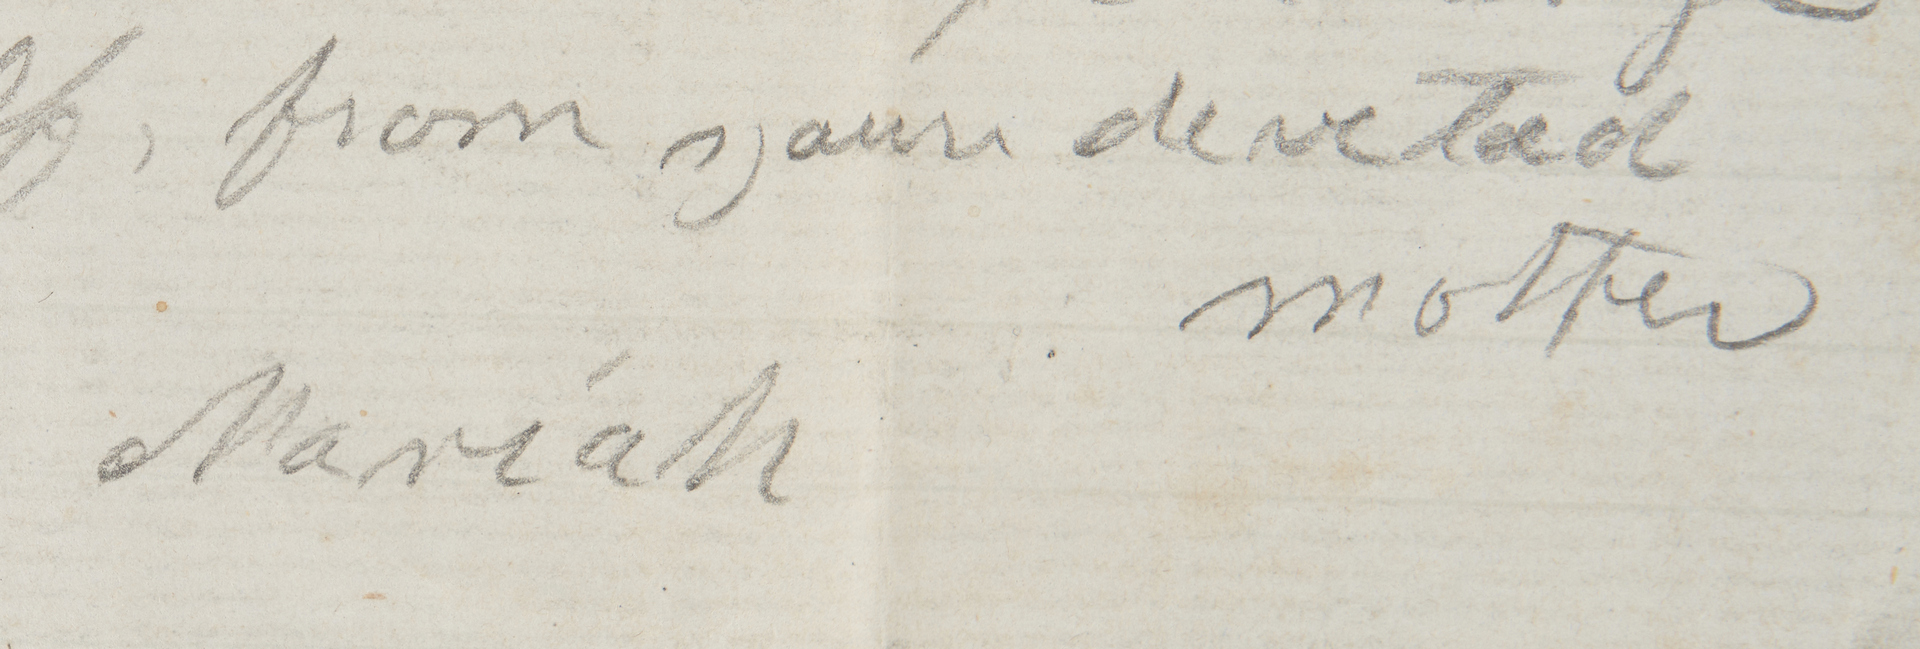 Lot 639: 1859 VA Letter Written by Slave named Mariah (2 items)